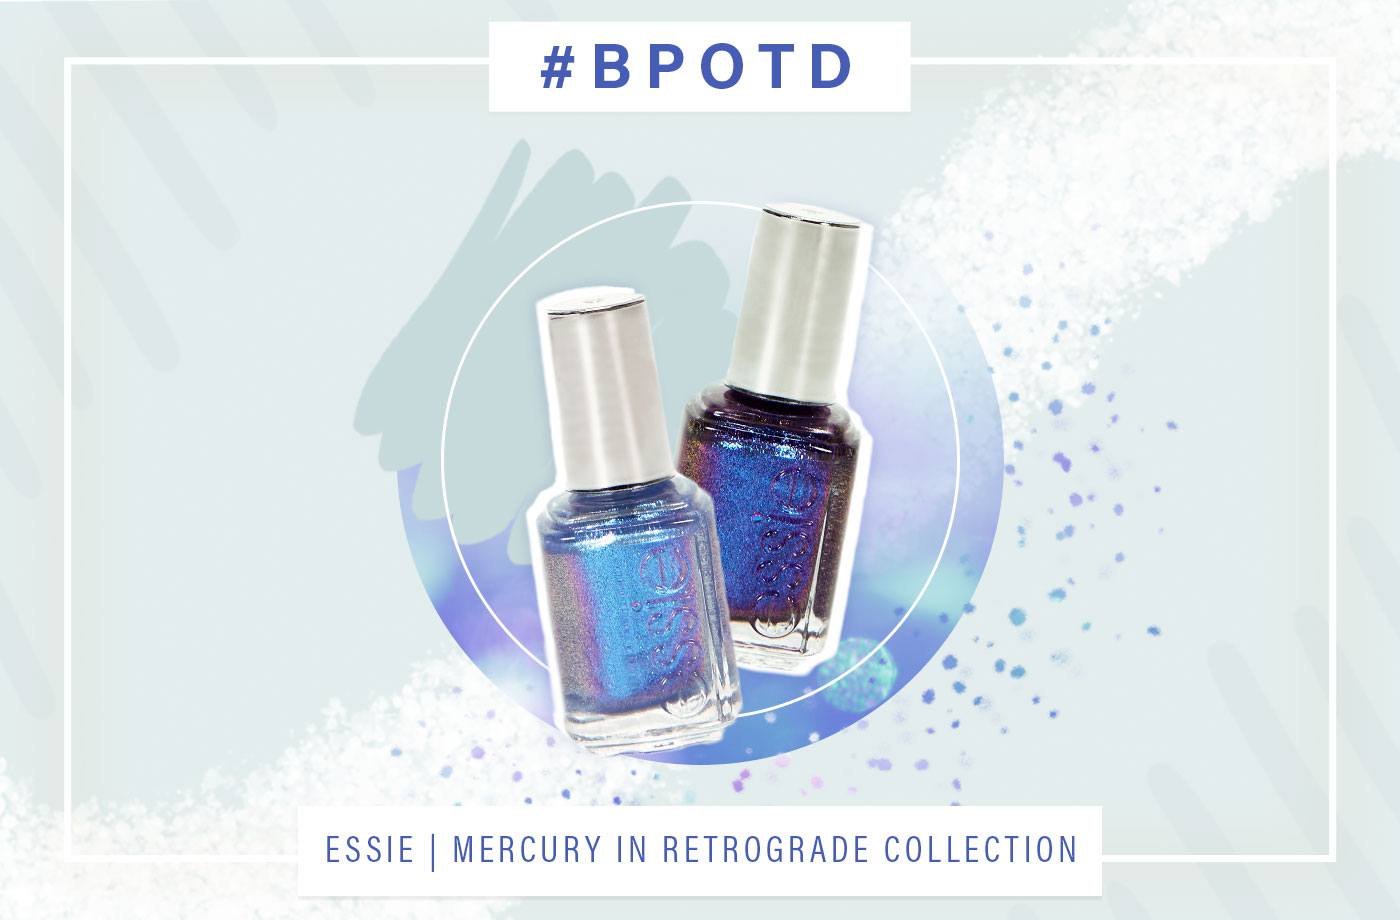 BPOTD: Essie Mercury in Retrograde Collection